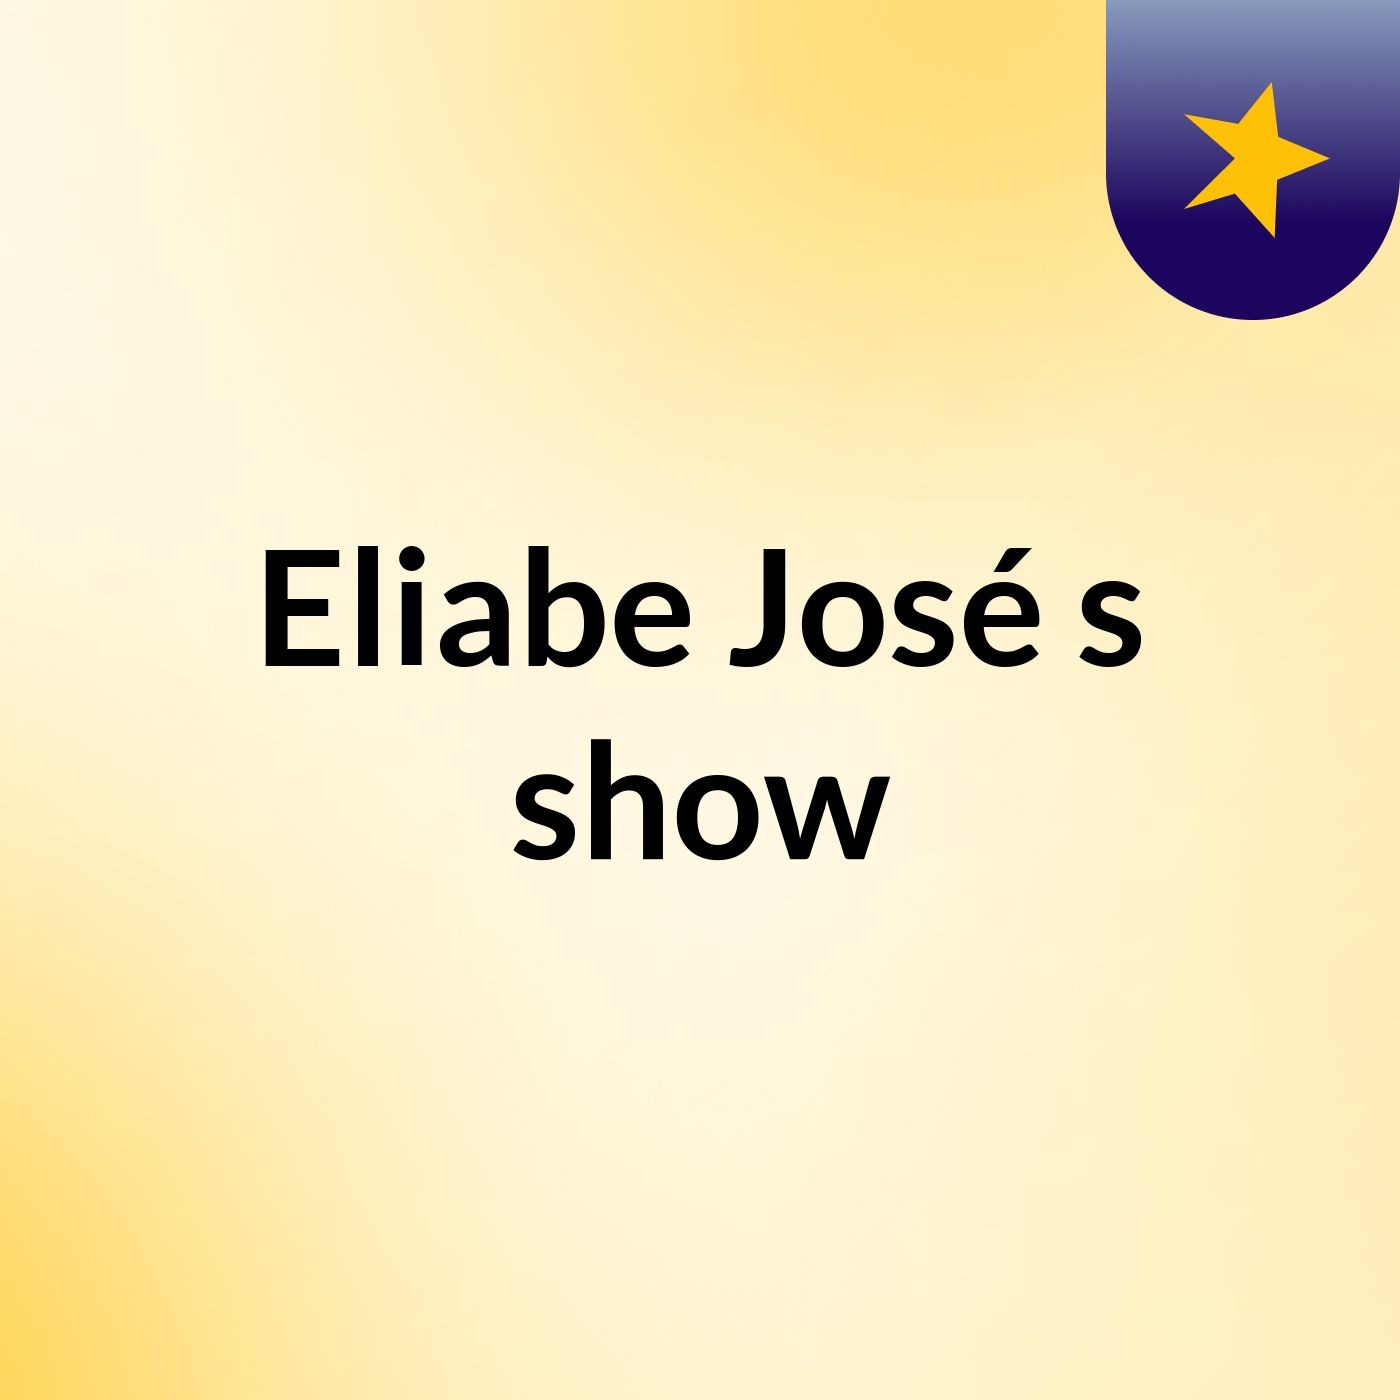 Eliabe José's show